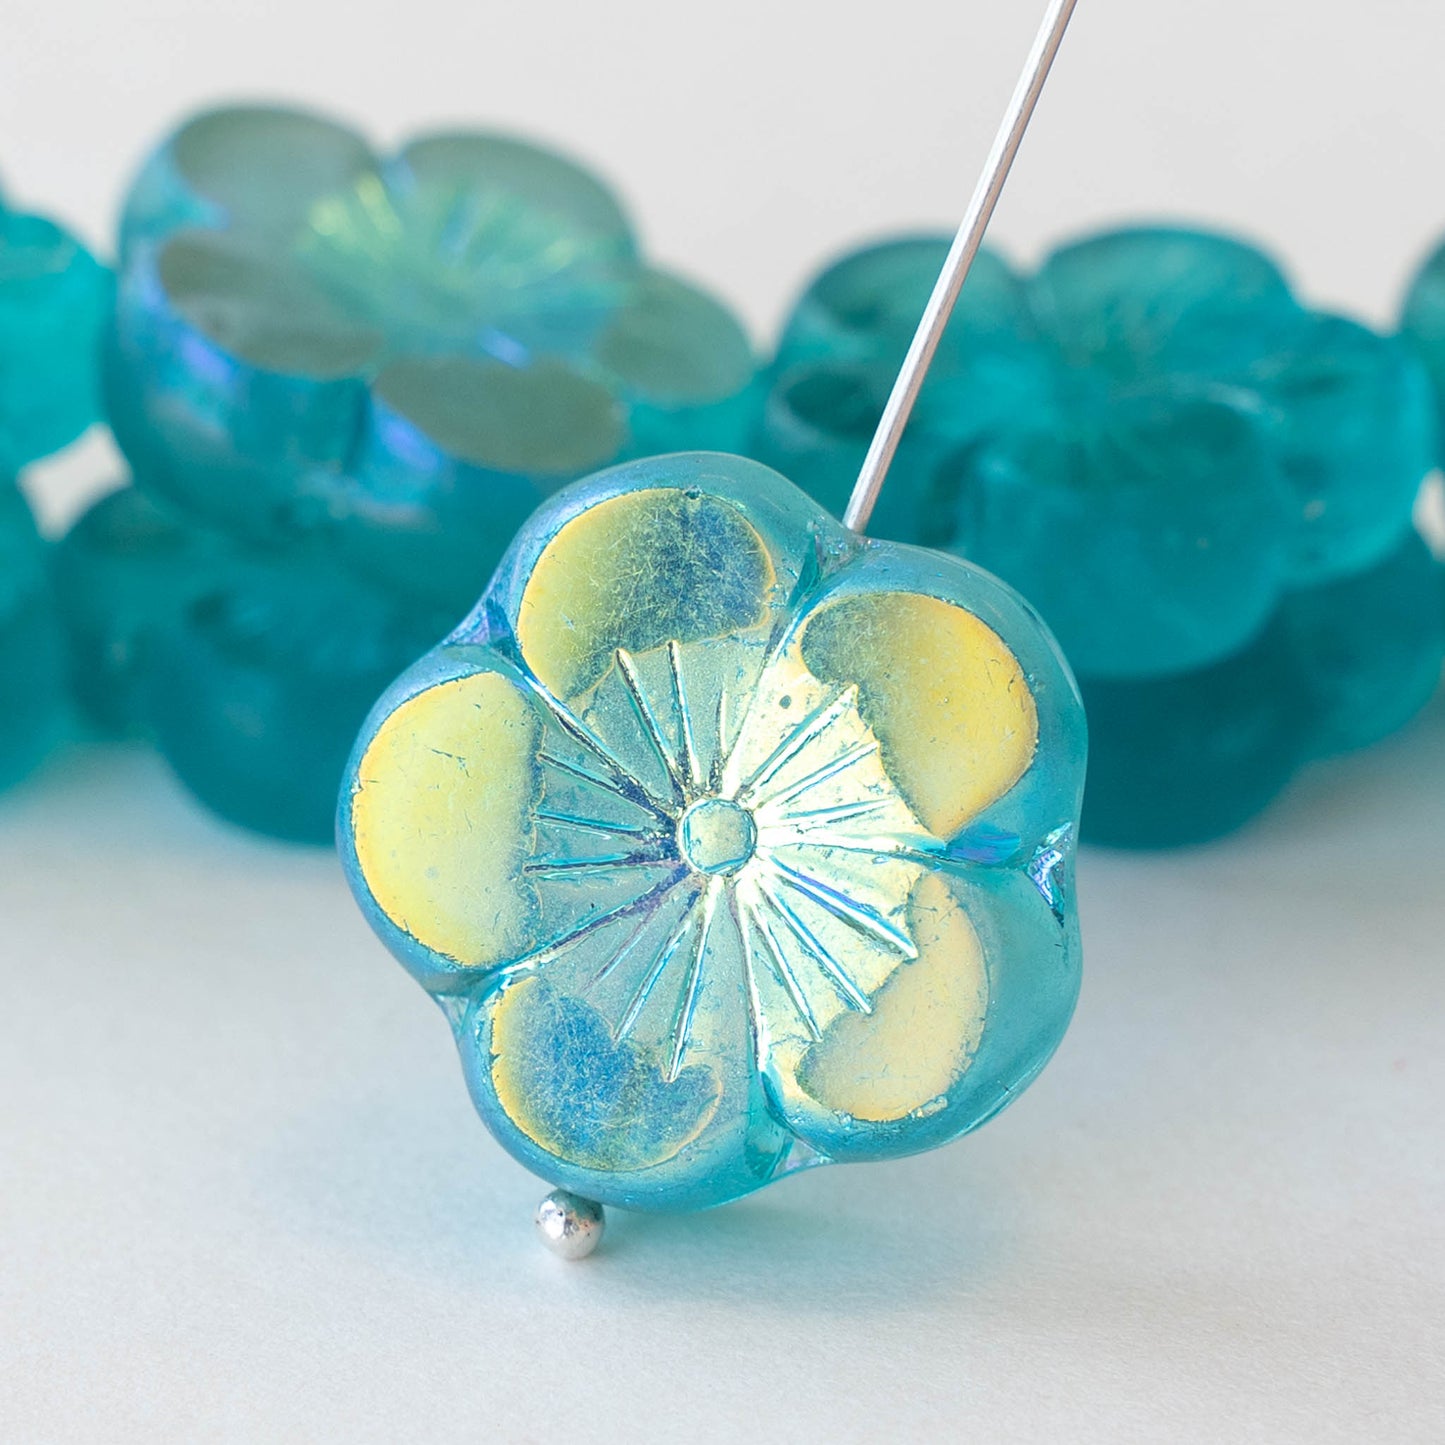 21mm Flower Beads - Aquamarine Blue AB - 15 Beads